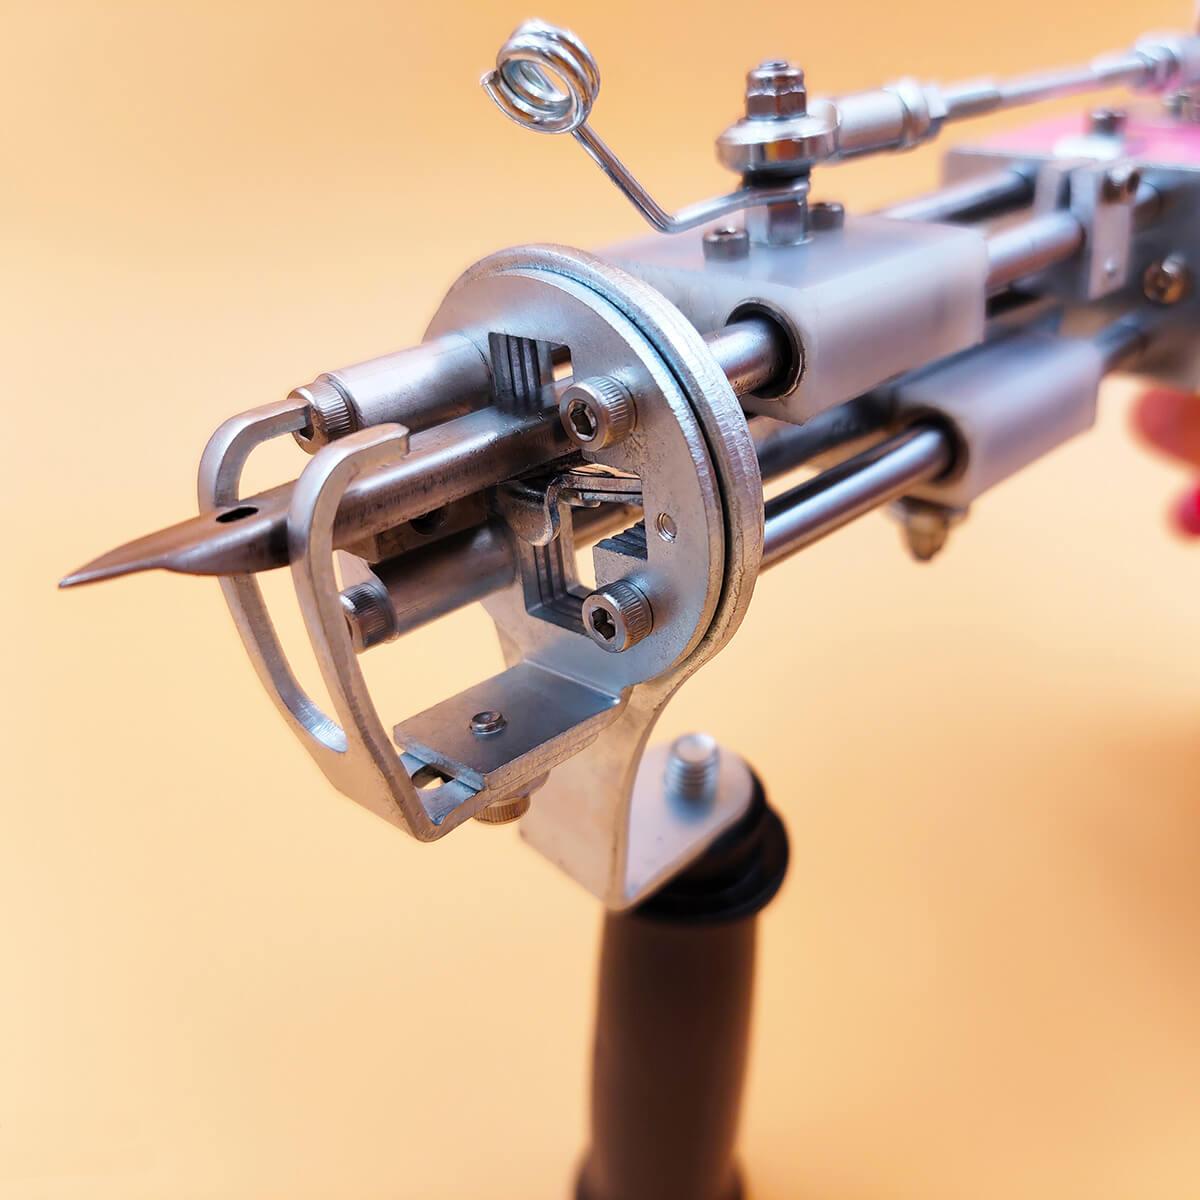 Pink Tufting Gun for Rug Tufting | LetsTuft